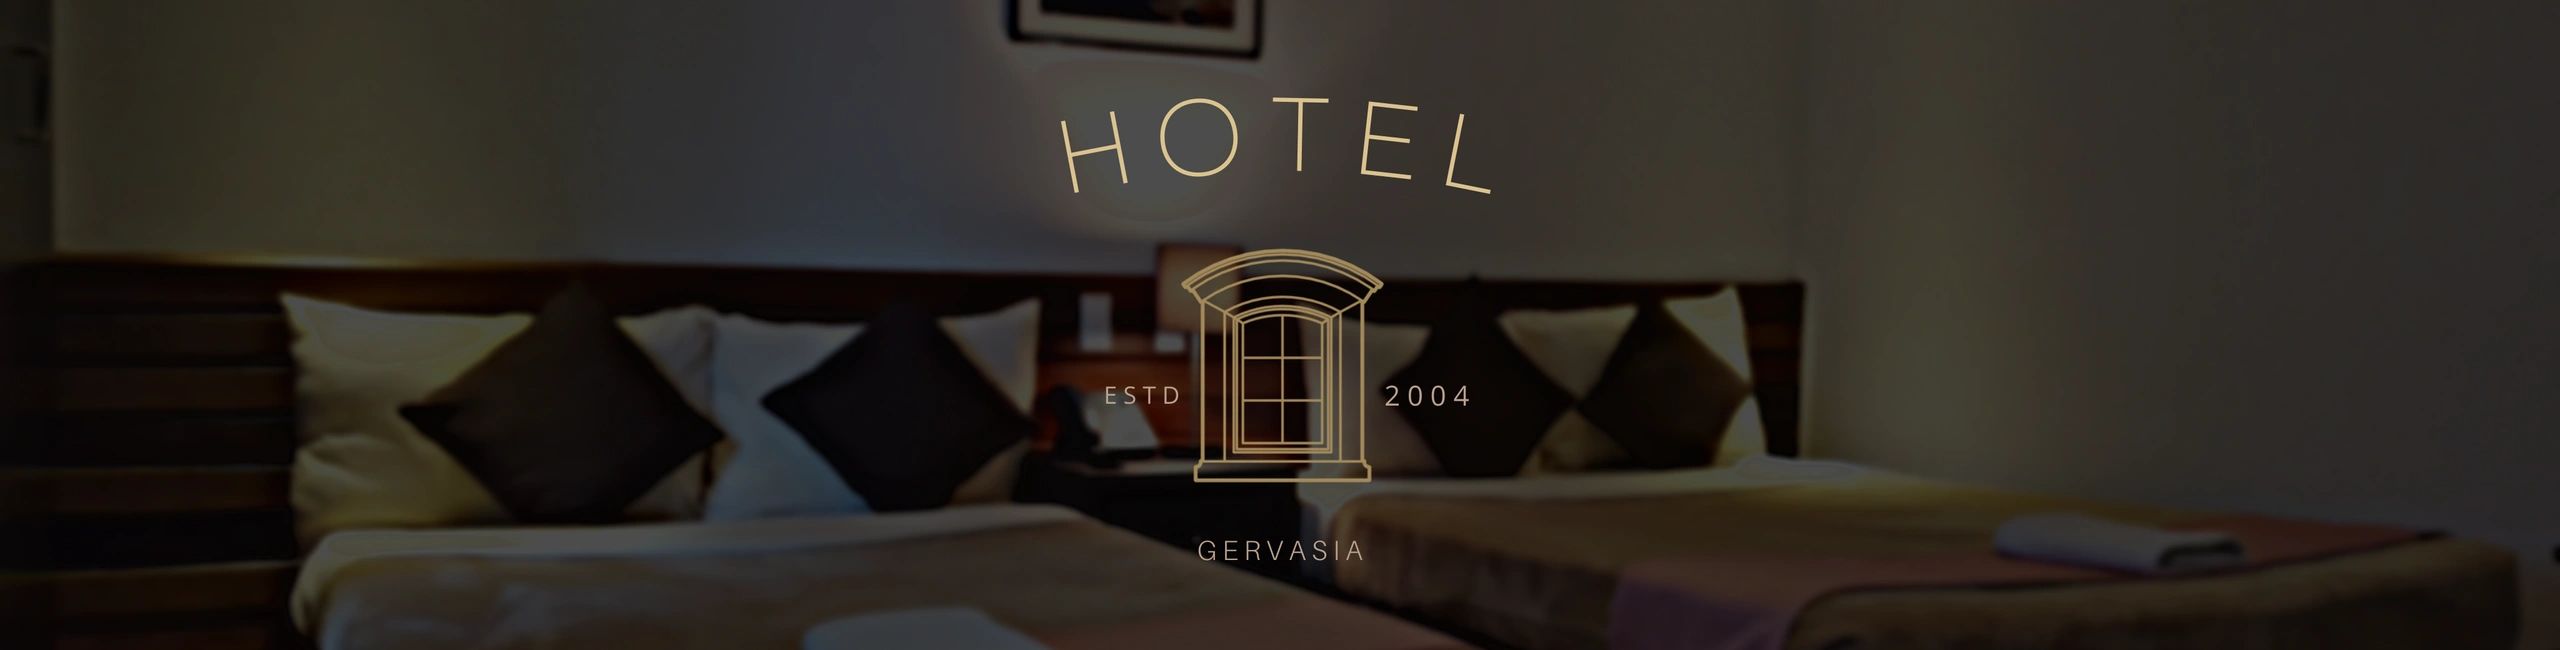 gervasia-hotel